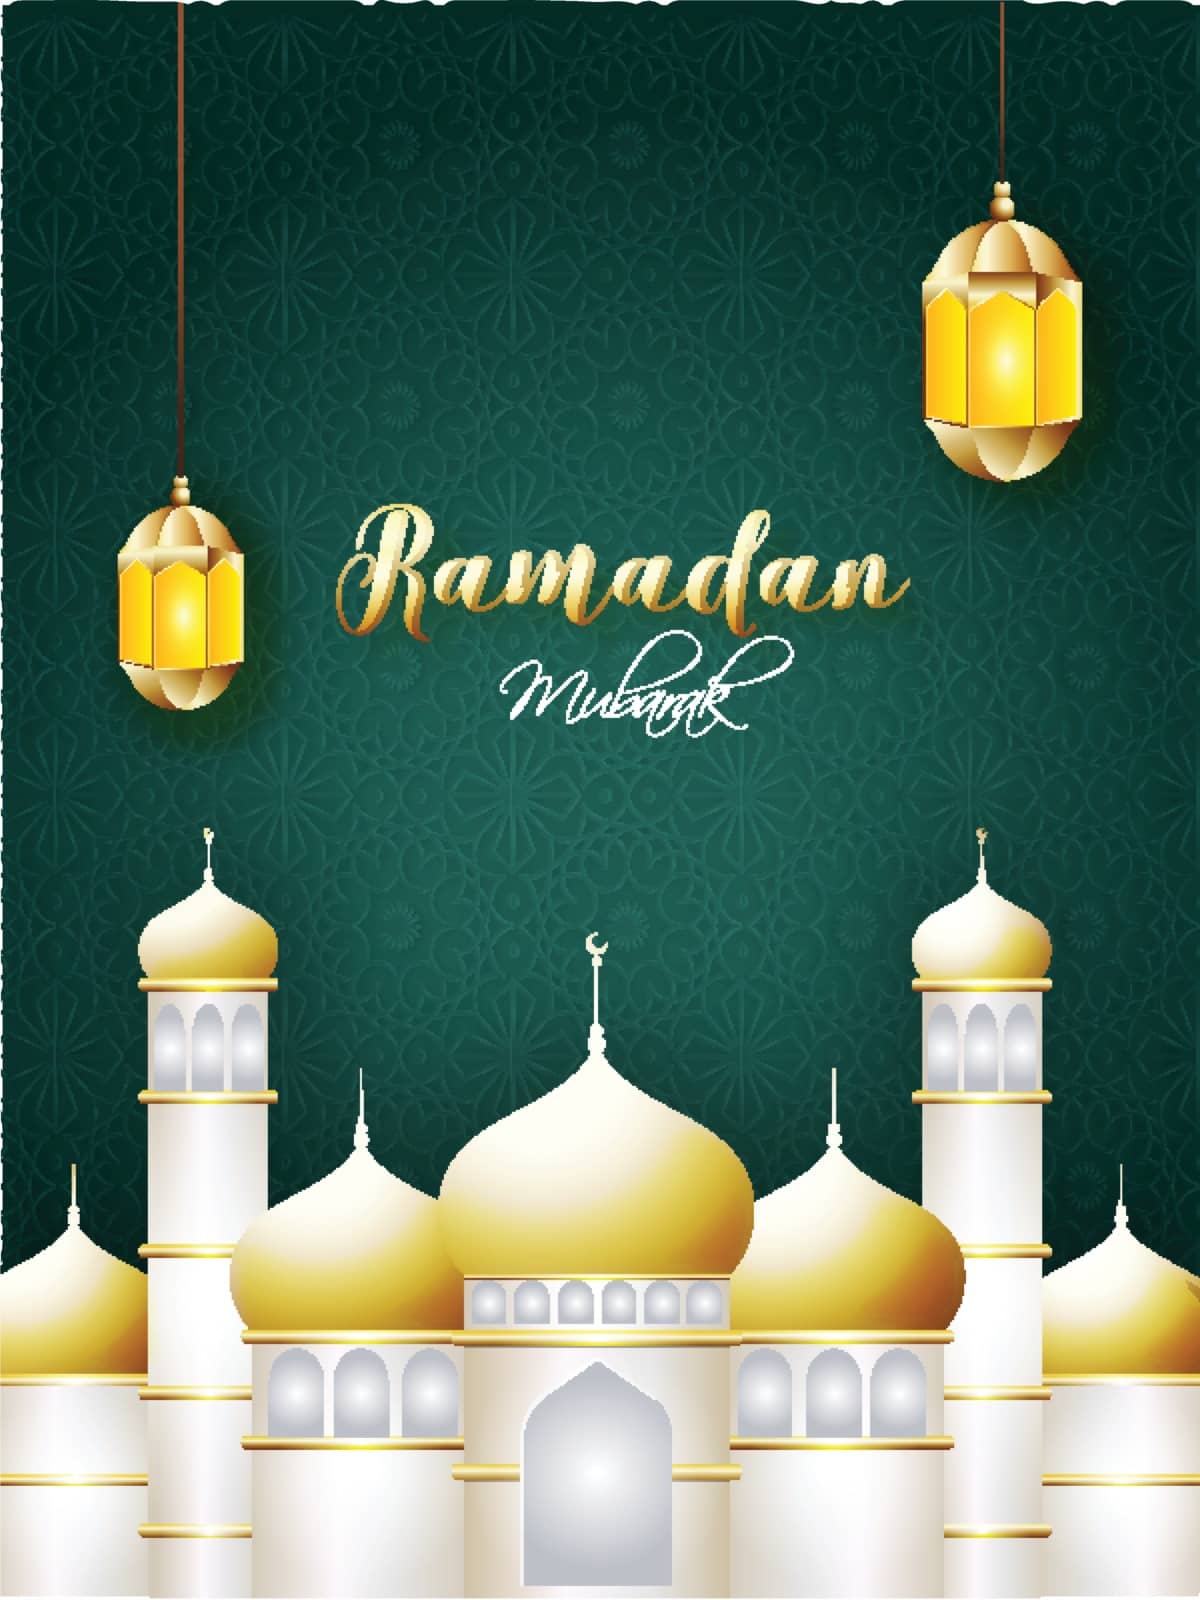 Ramadan Mubarak template or flyer design with illustration of mosque and hanging illuminated lanterns on green islamic pattern background.